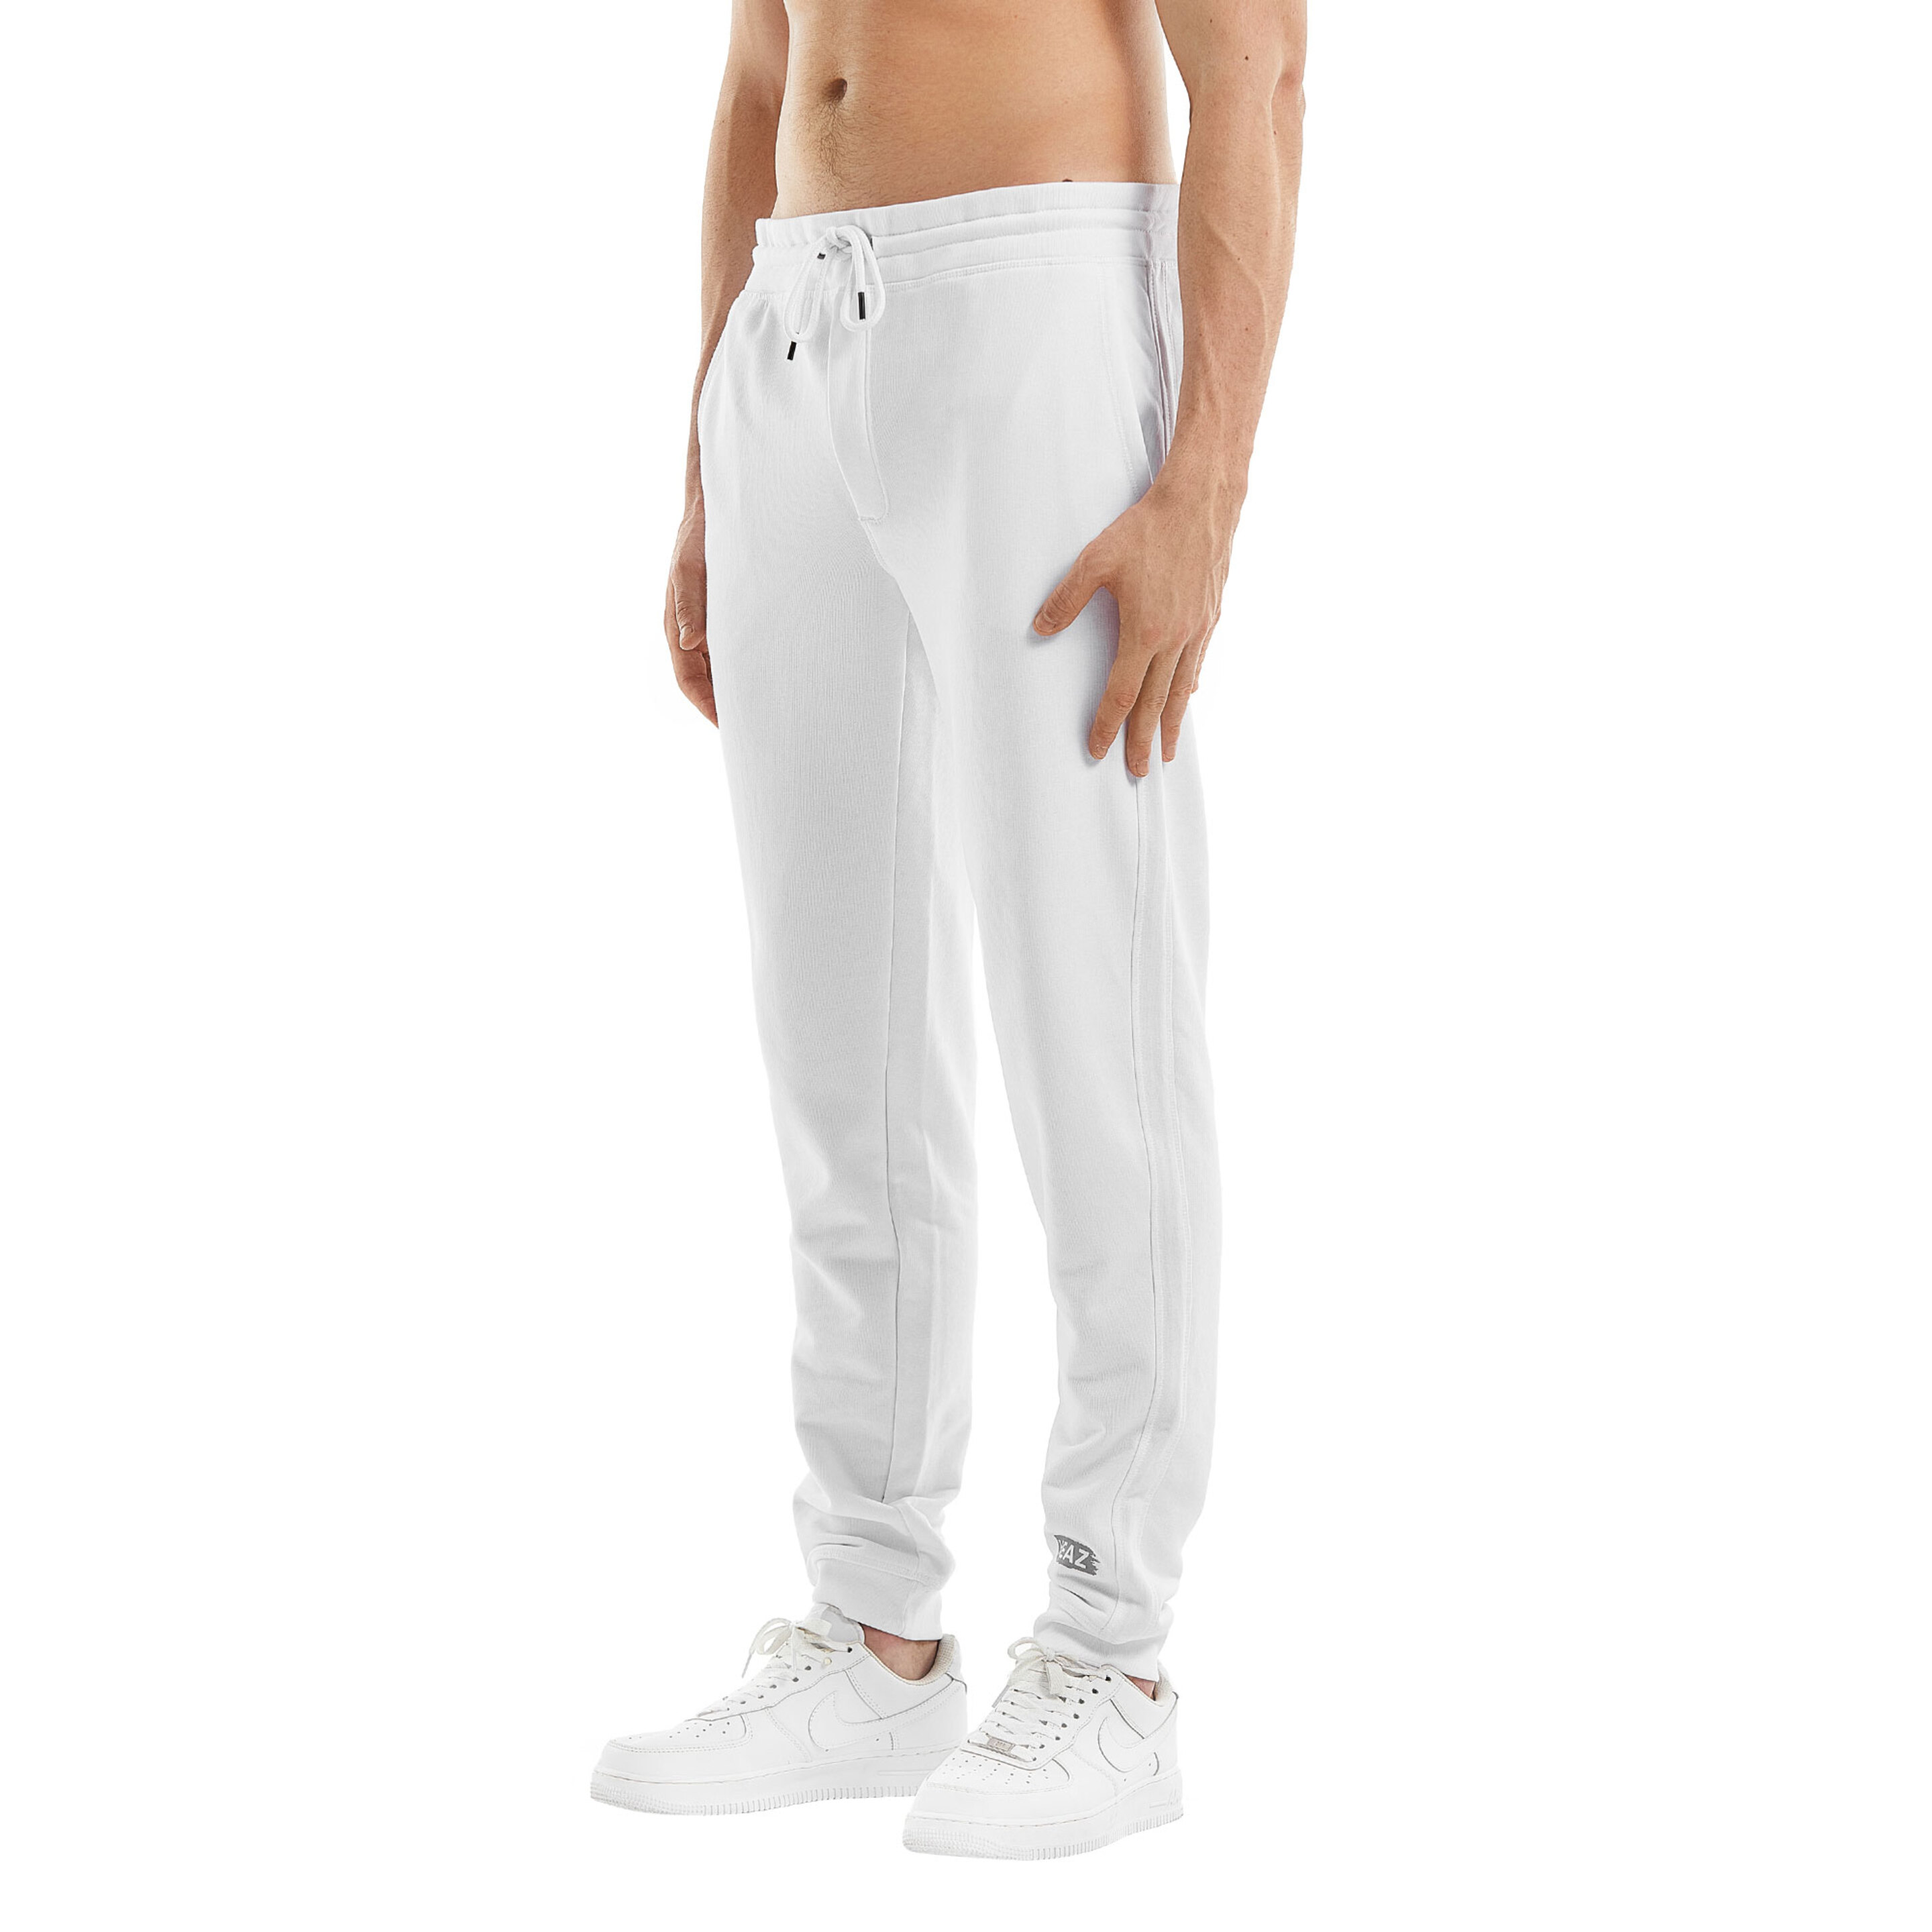 Pantalones De Deporte Yeaz Chalex - blanco - 